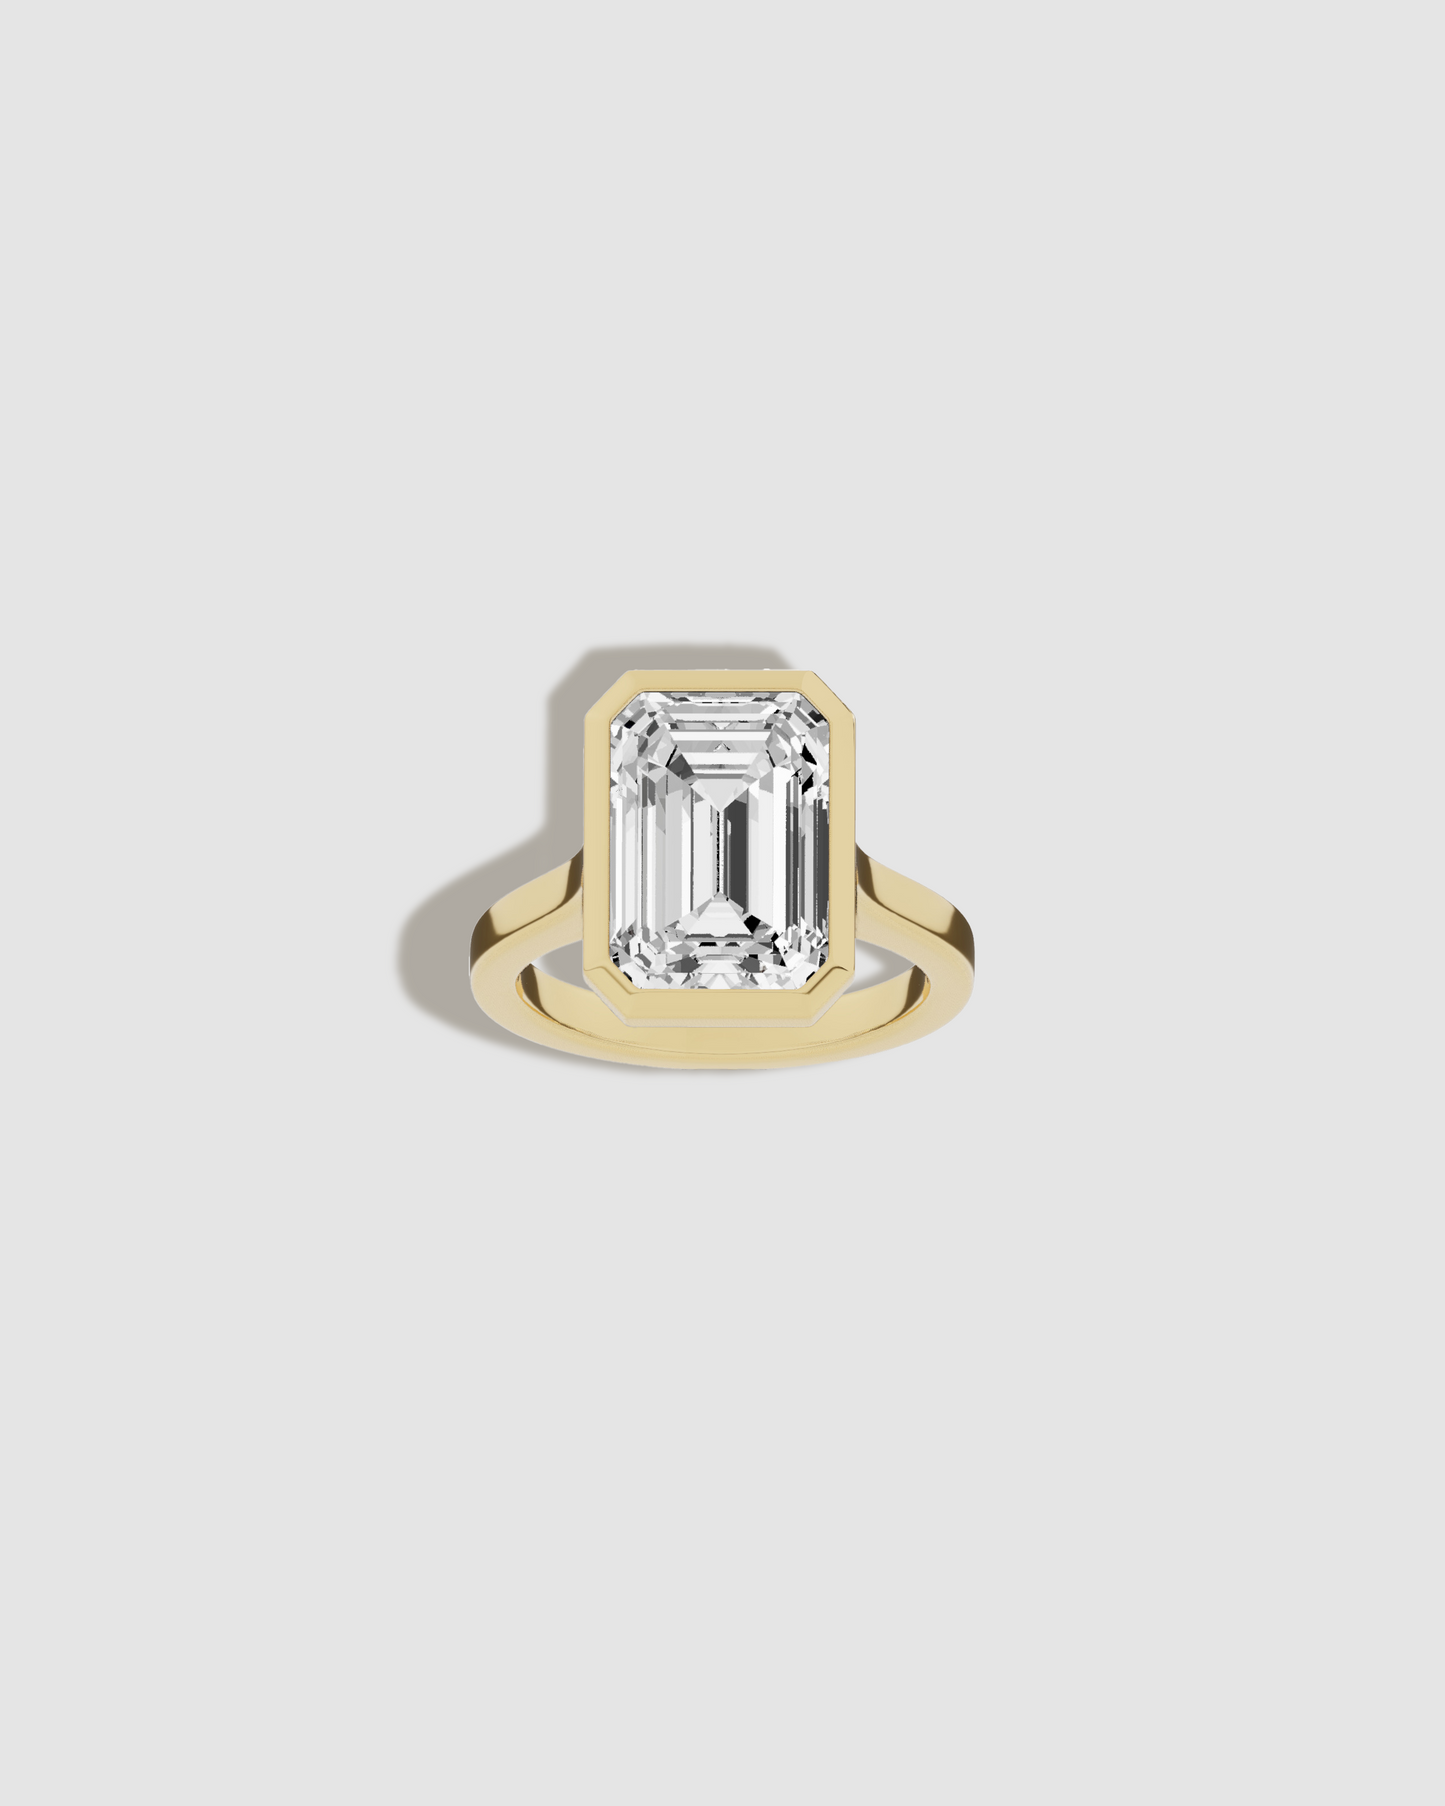 Square shaped diamond on gold band